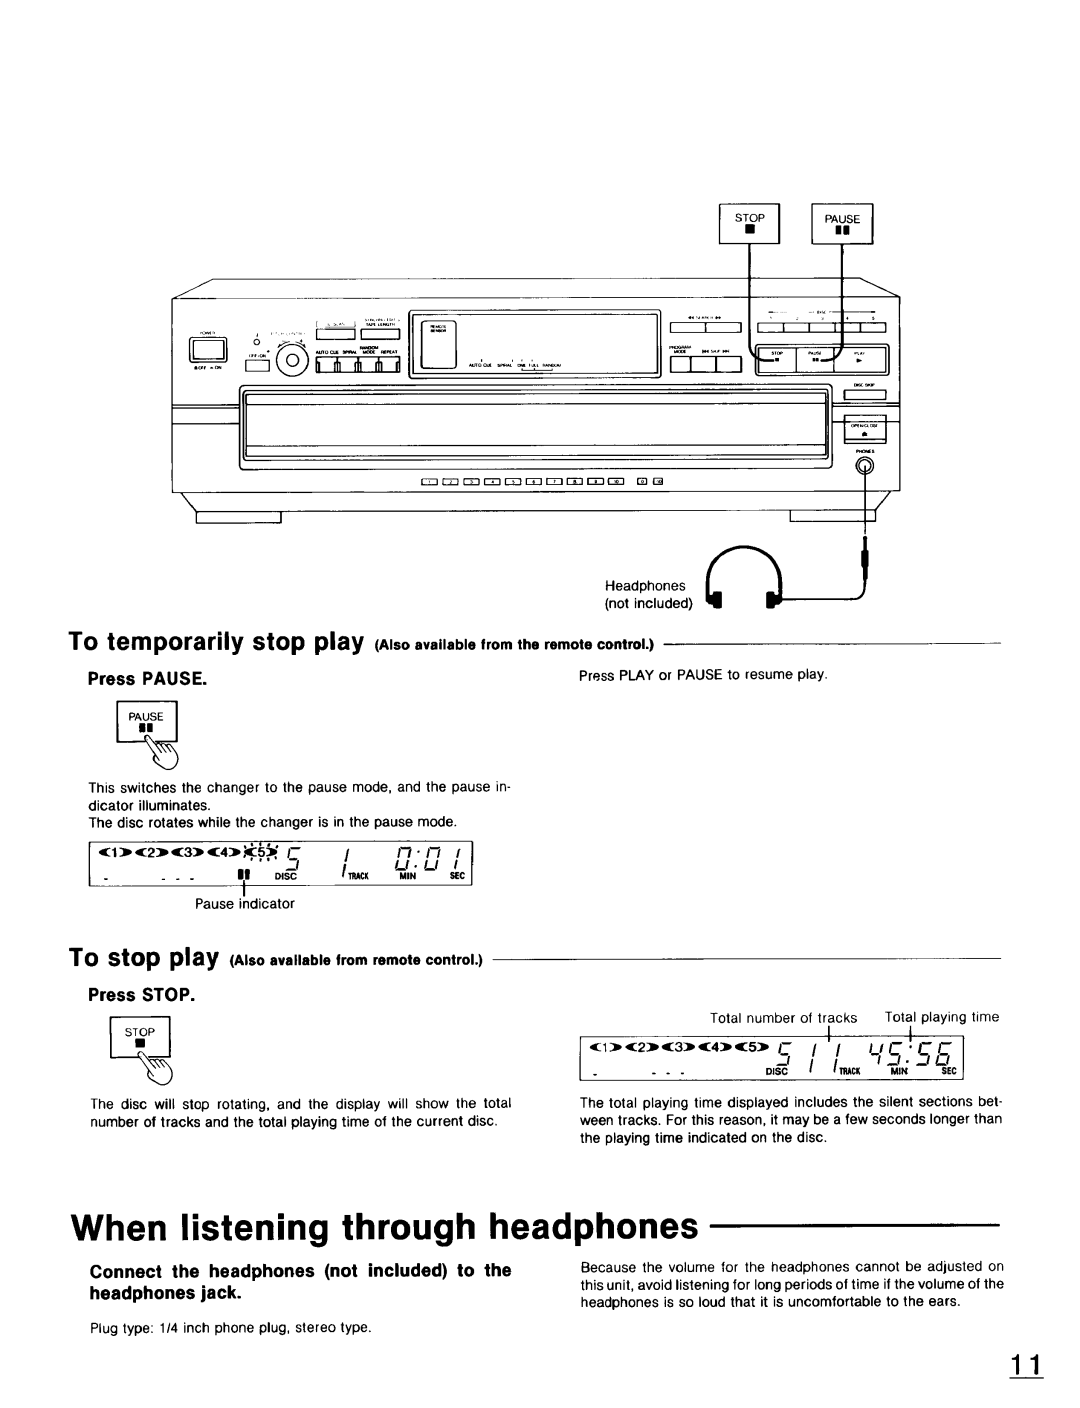 Technics SL-PD947 When listening through headphones, h II1 dl-dd D, Press PAUSE, Press STOP, 1 2345I - I I I I C F F, lr K 